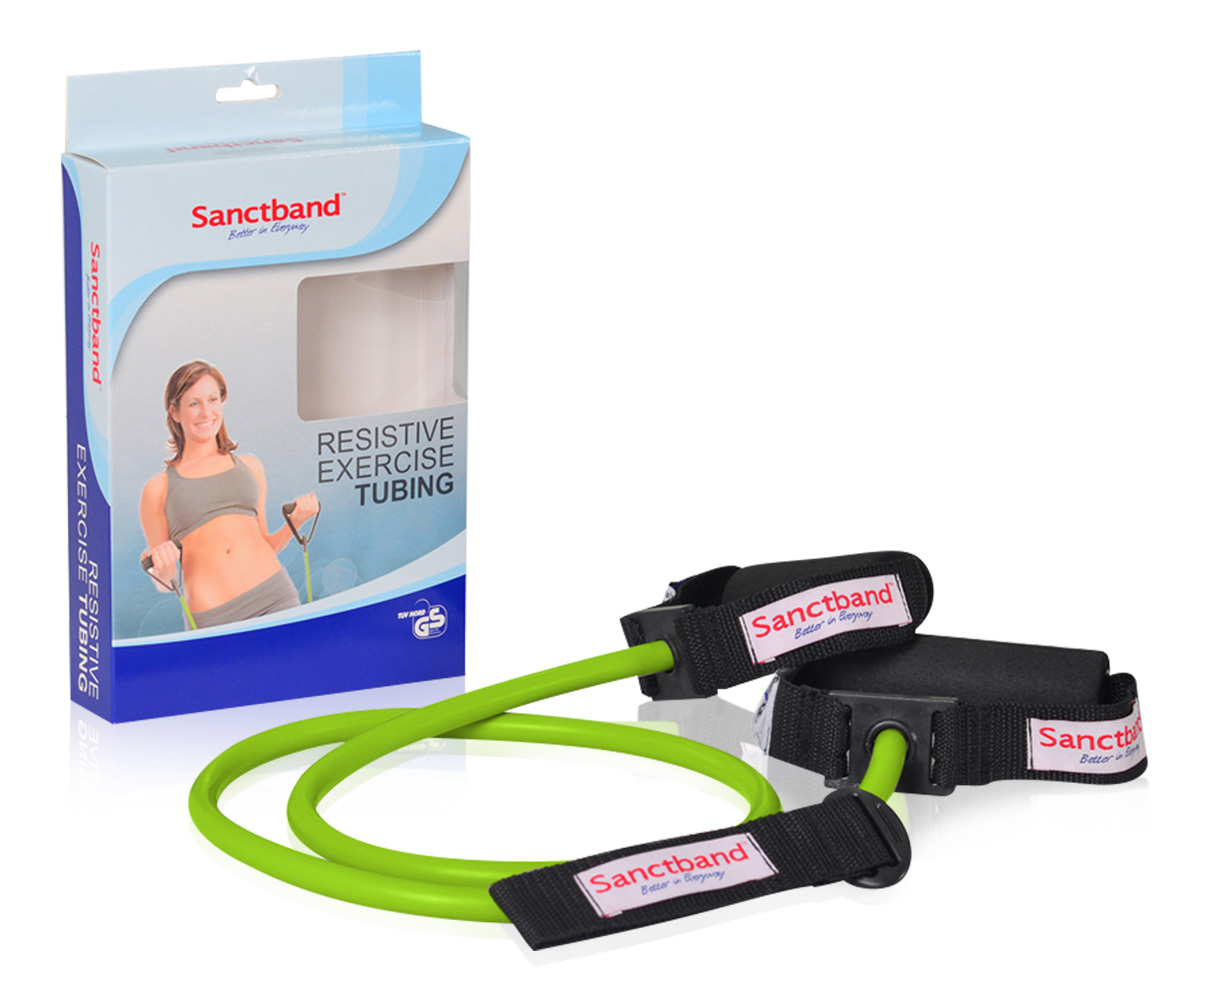 Sanctband Resistive Exercise Tubing Lime